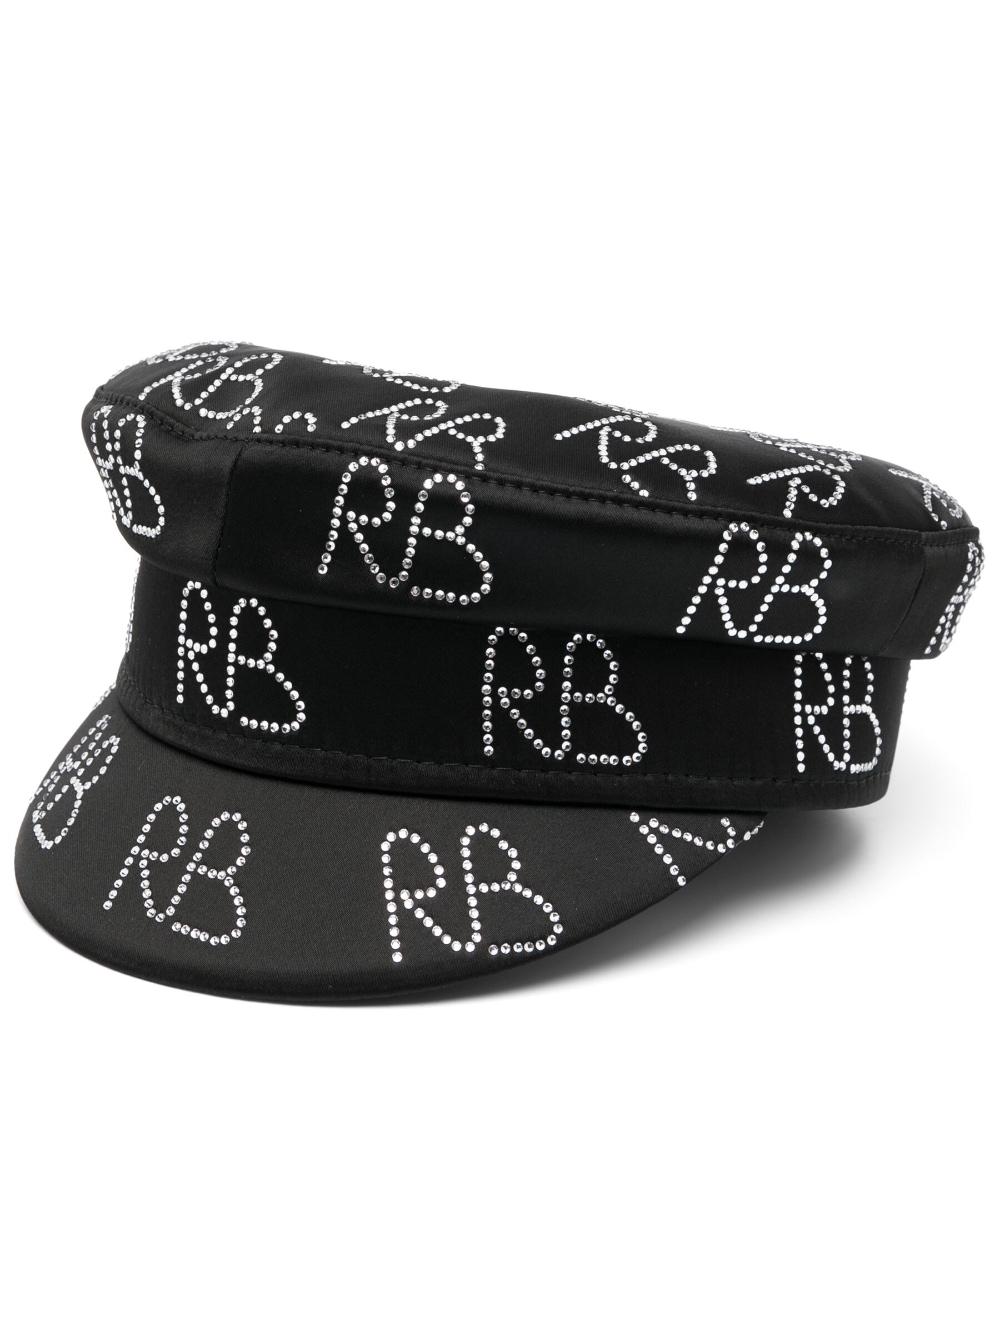 Ruslan Baginskiy Baker Boy Logo Strass Hat in Black | Lyst UK